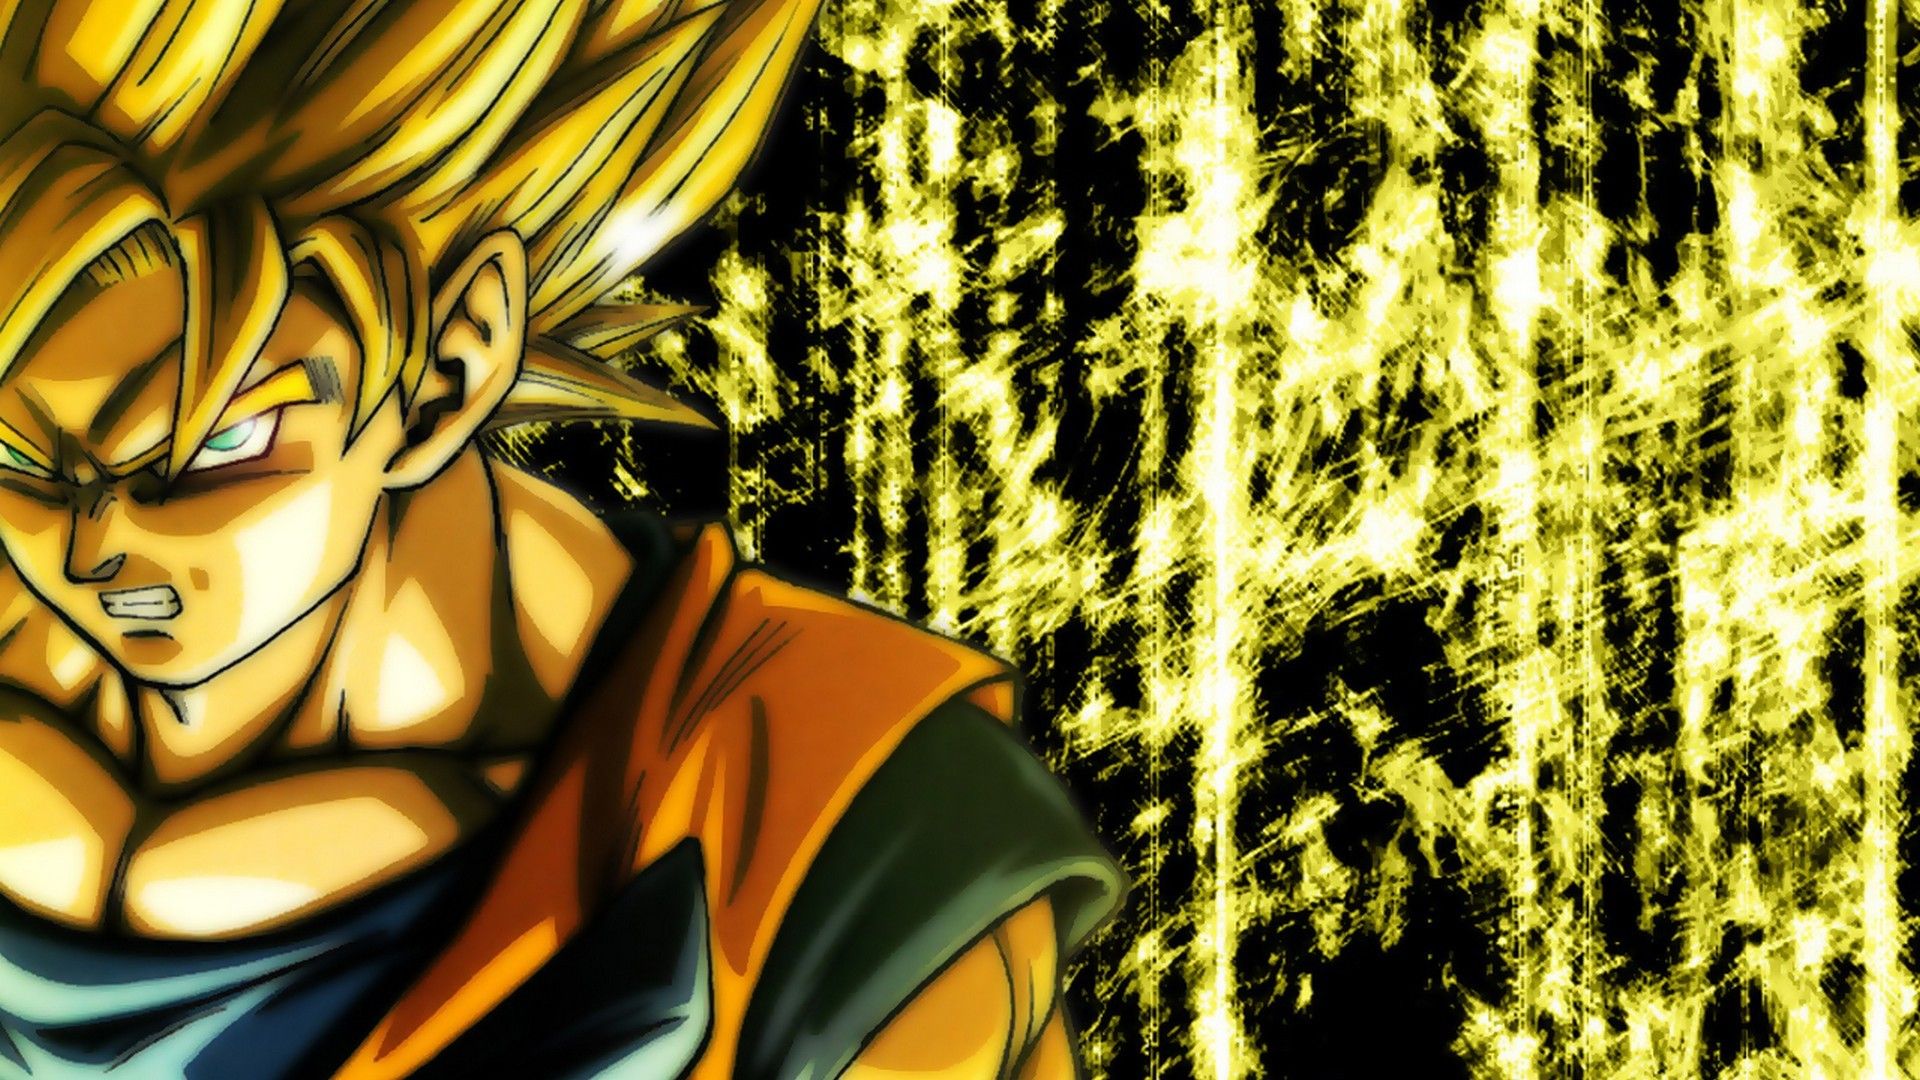 HD Goku Super Saiyan Background .wallpapercute.com